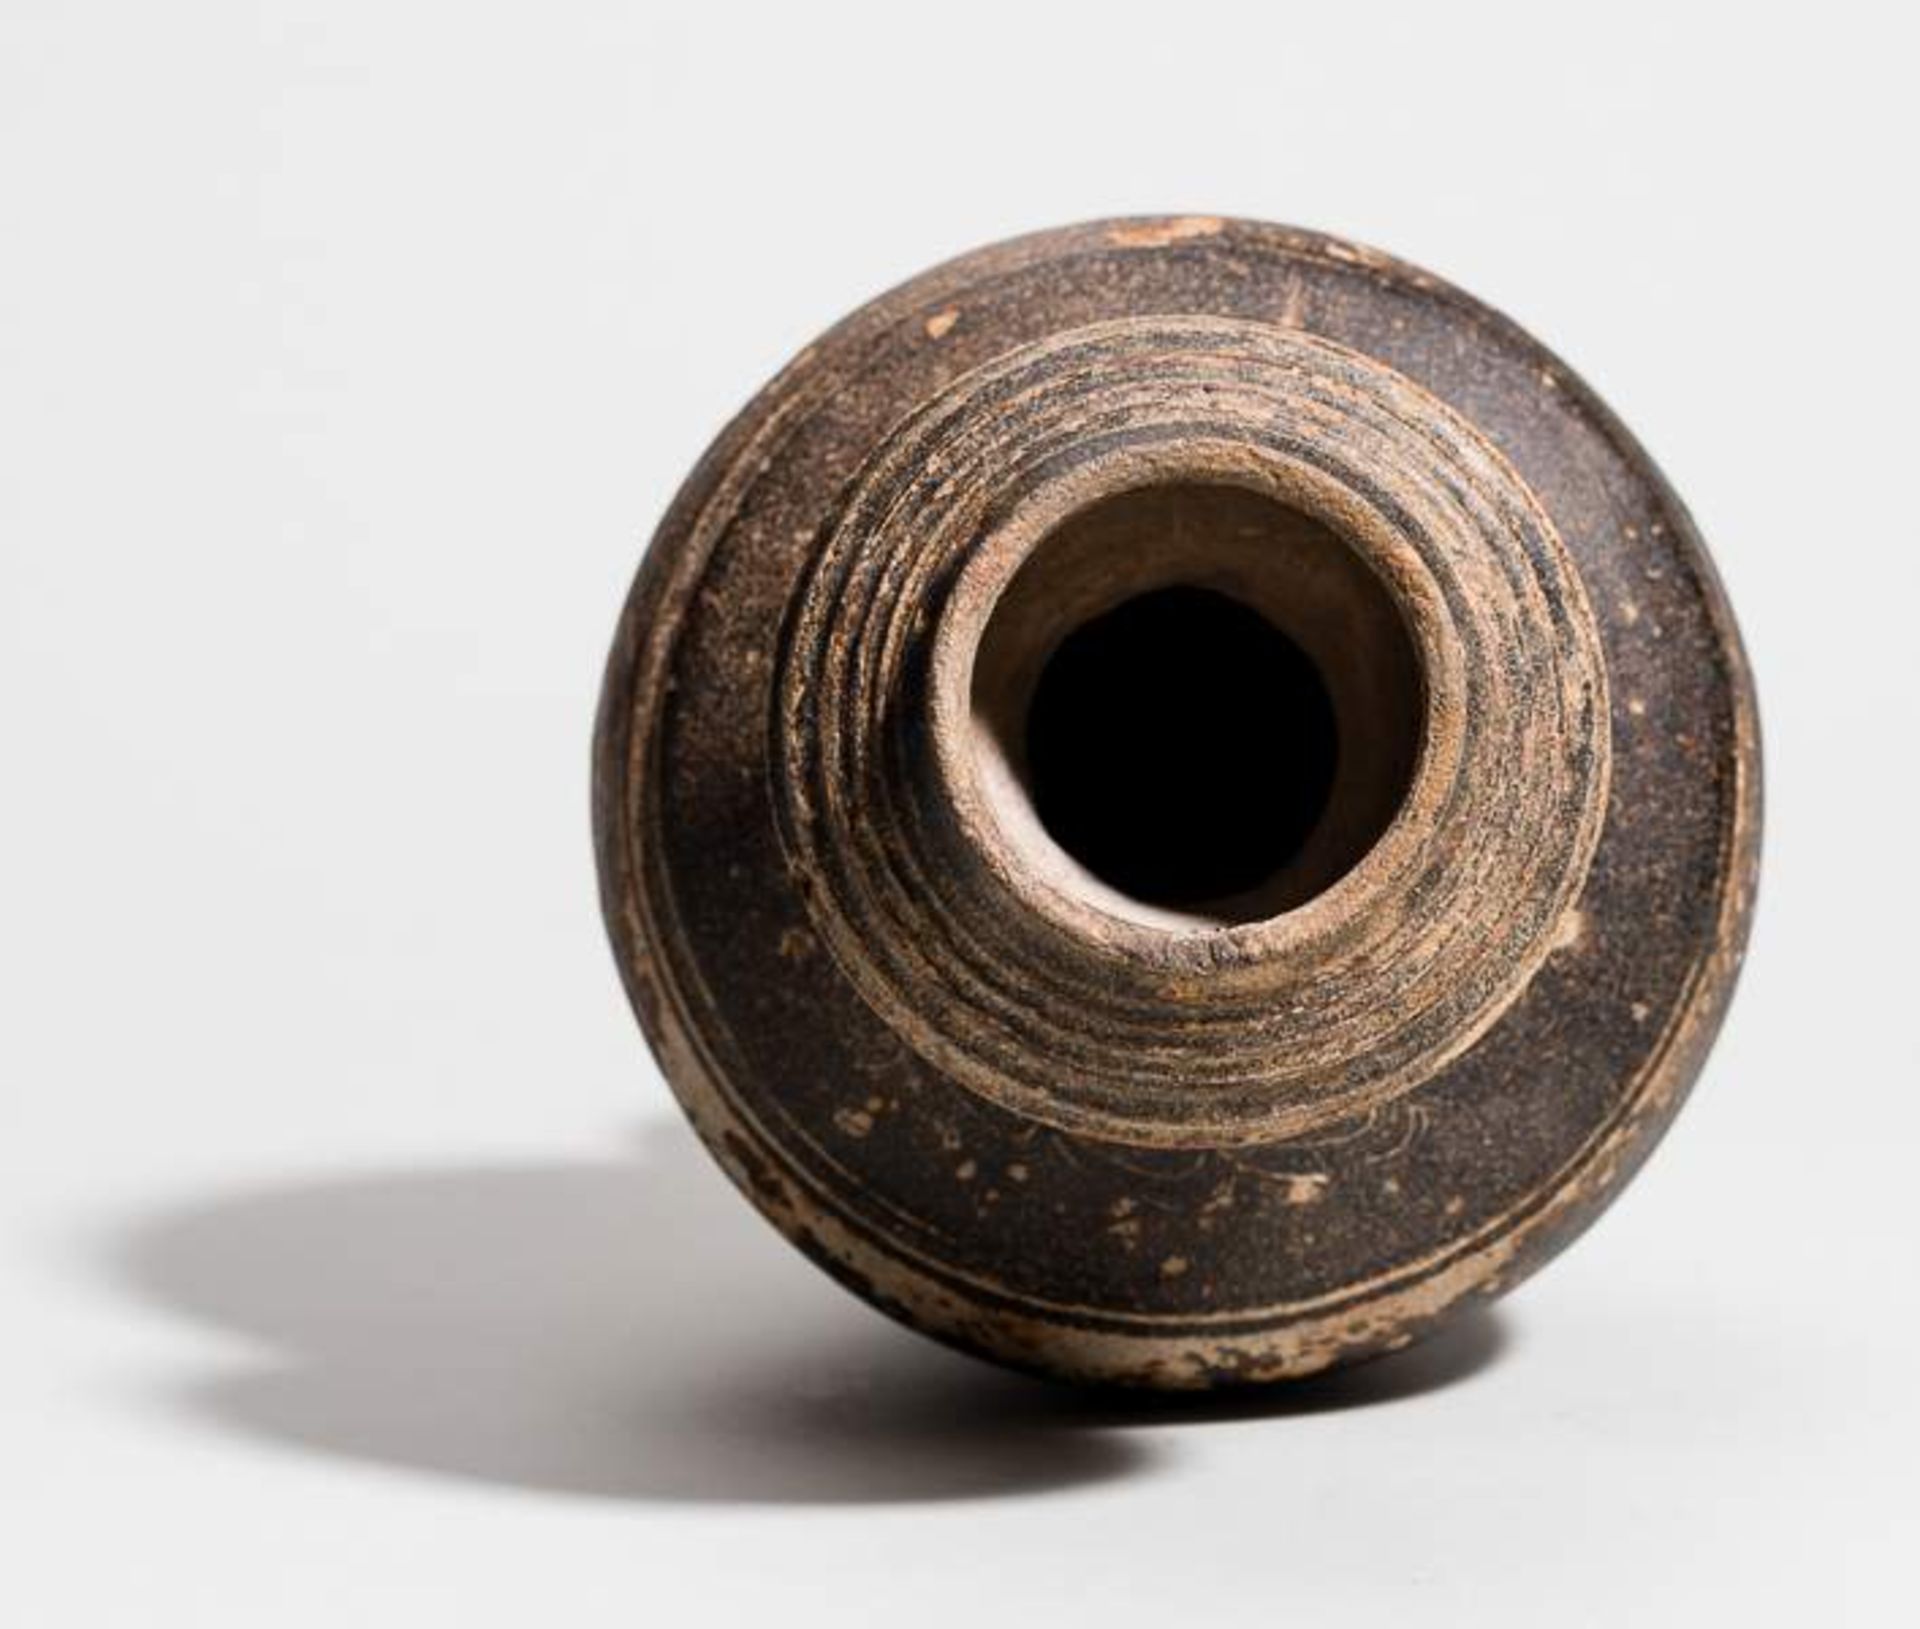 VASENFÖRMIGES GEFÄSS Keramik. Kambodscha, Altes Königreich Khmer, 11. bis 12. Jh. Seltener Typus, - Image 10 of 11